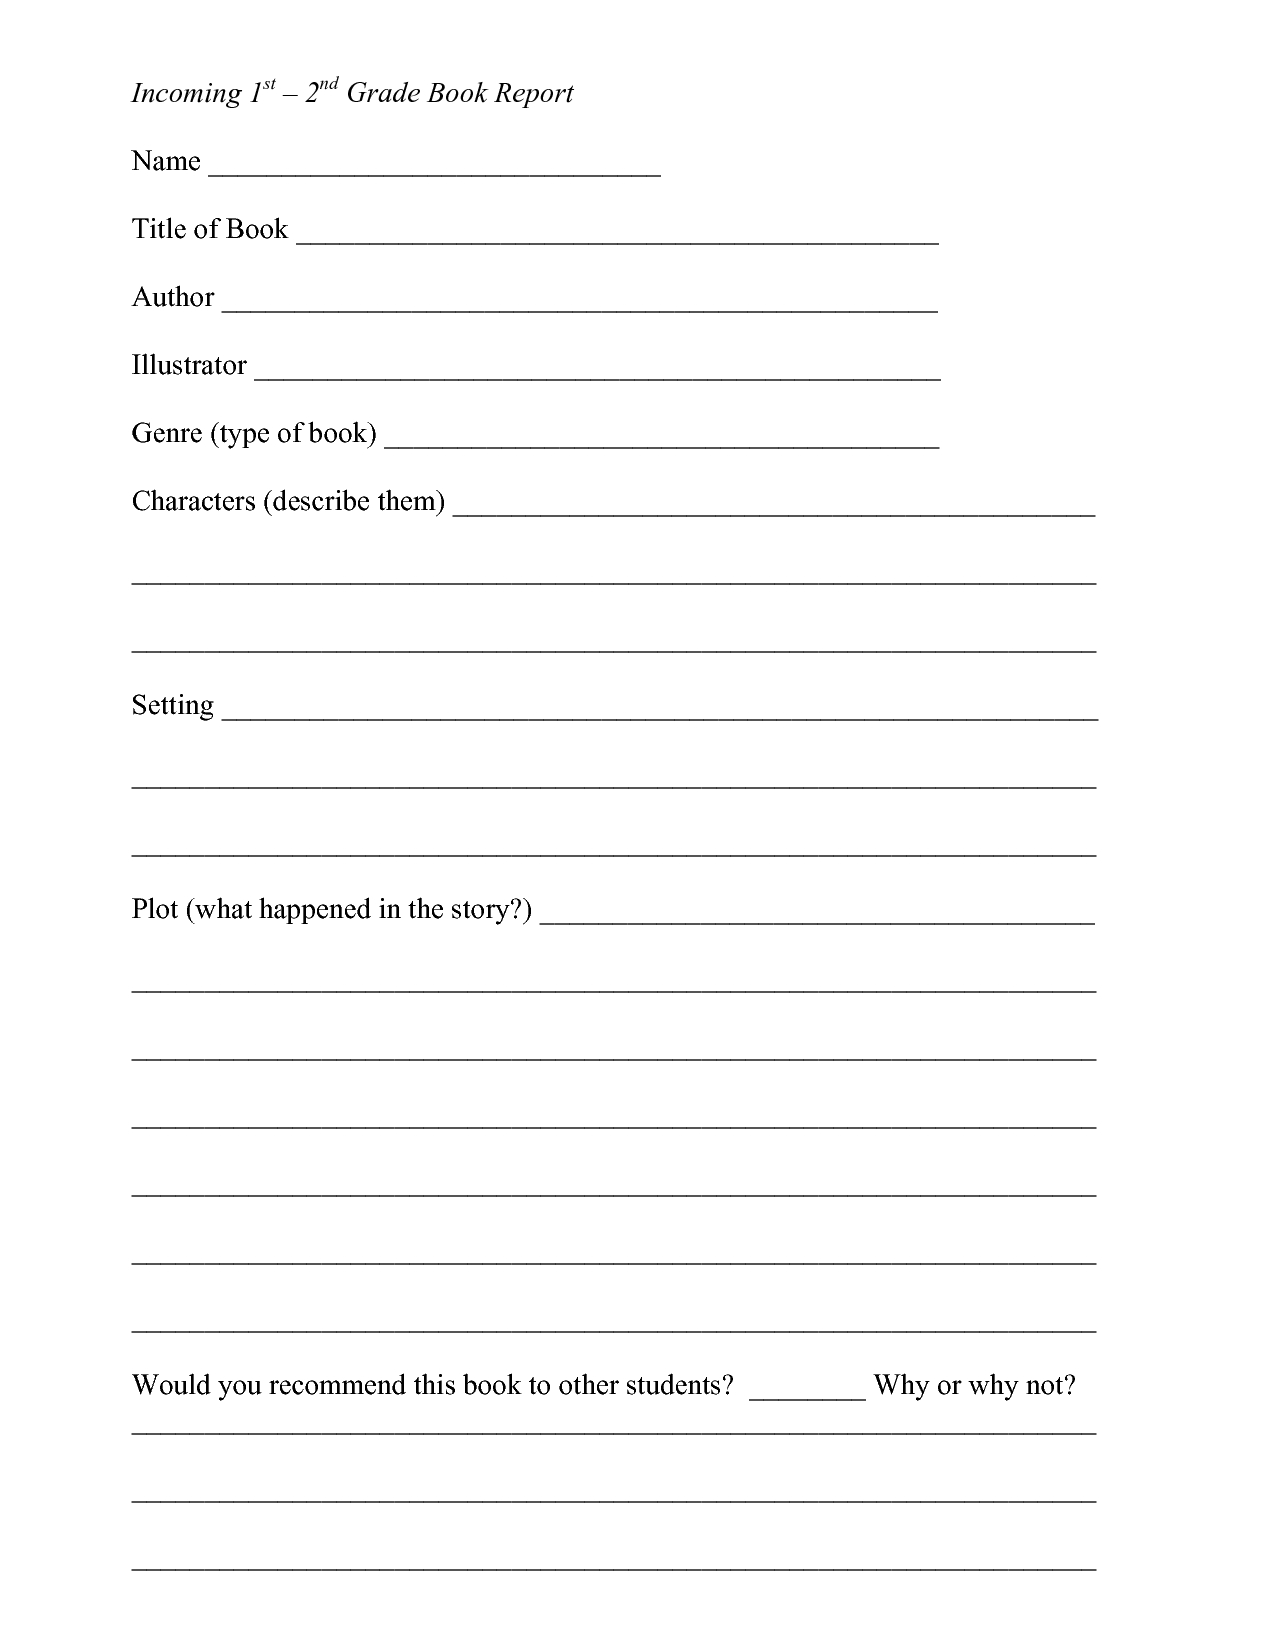 Book Report Template 2Nd Grade Free – Book Report Form Intended For 4Th Grade Book Report Template